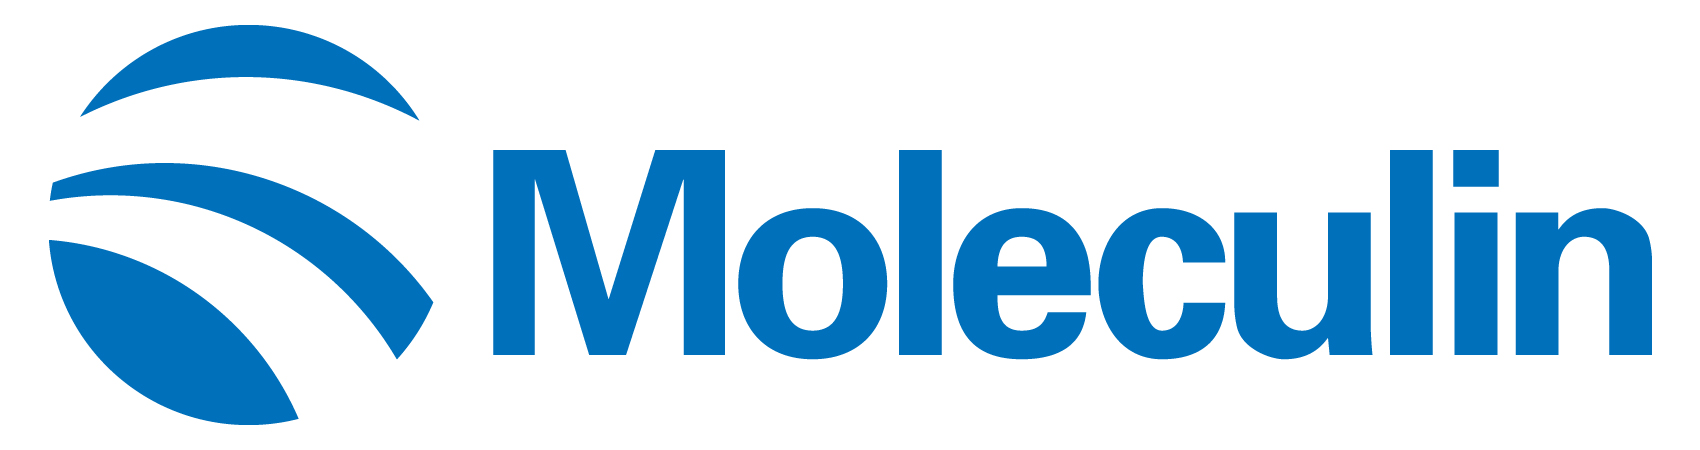 moleculin-logo.jpg